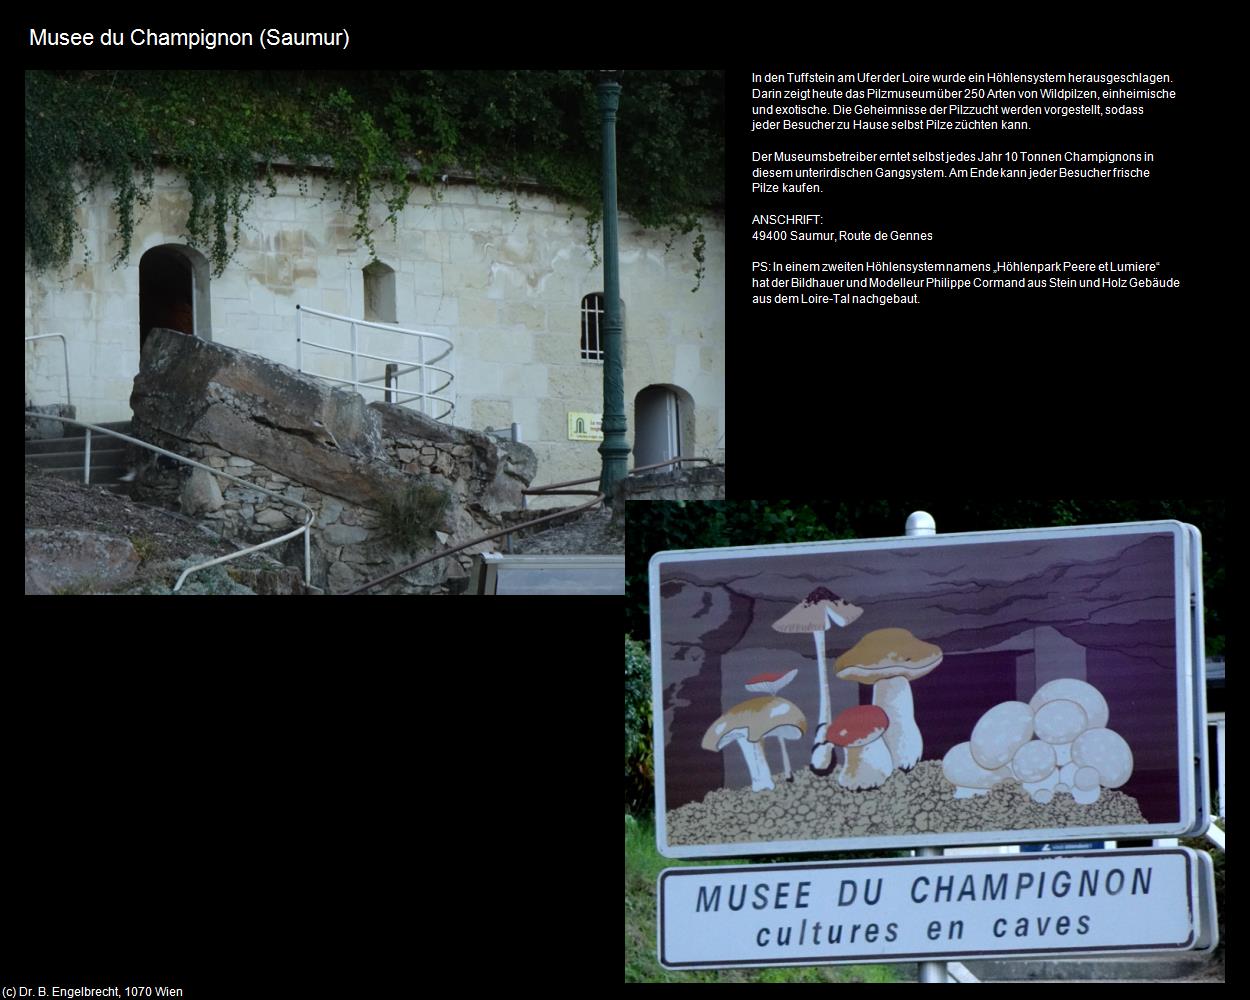 Musee du Champignon (Saumur (FR-PDL)) in Kulturatlas-FRANKREICH